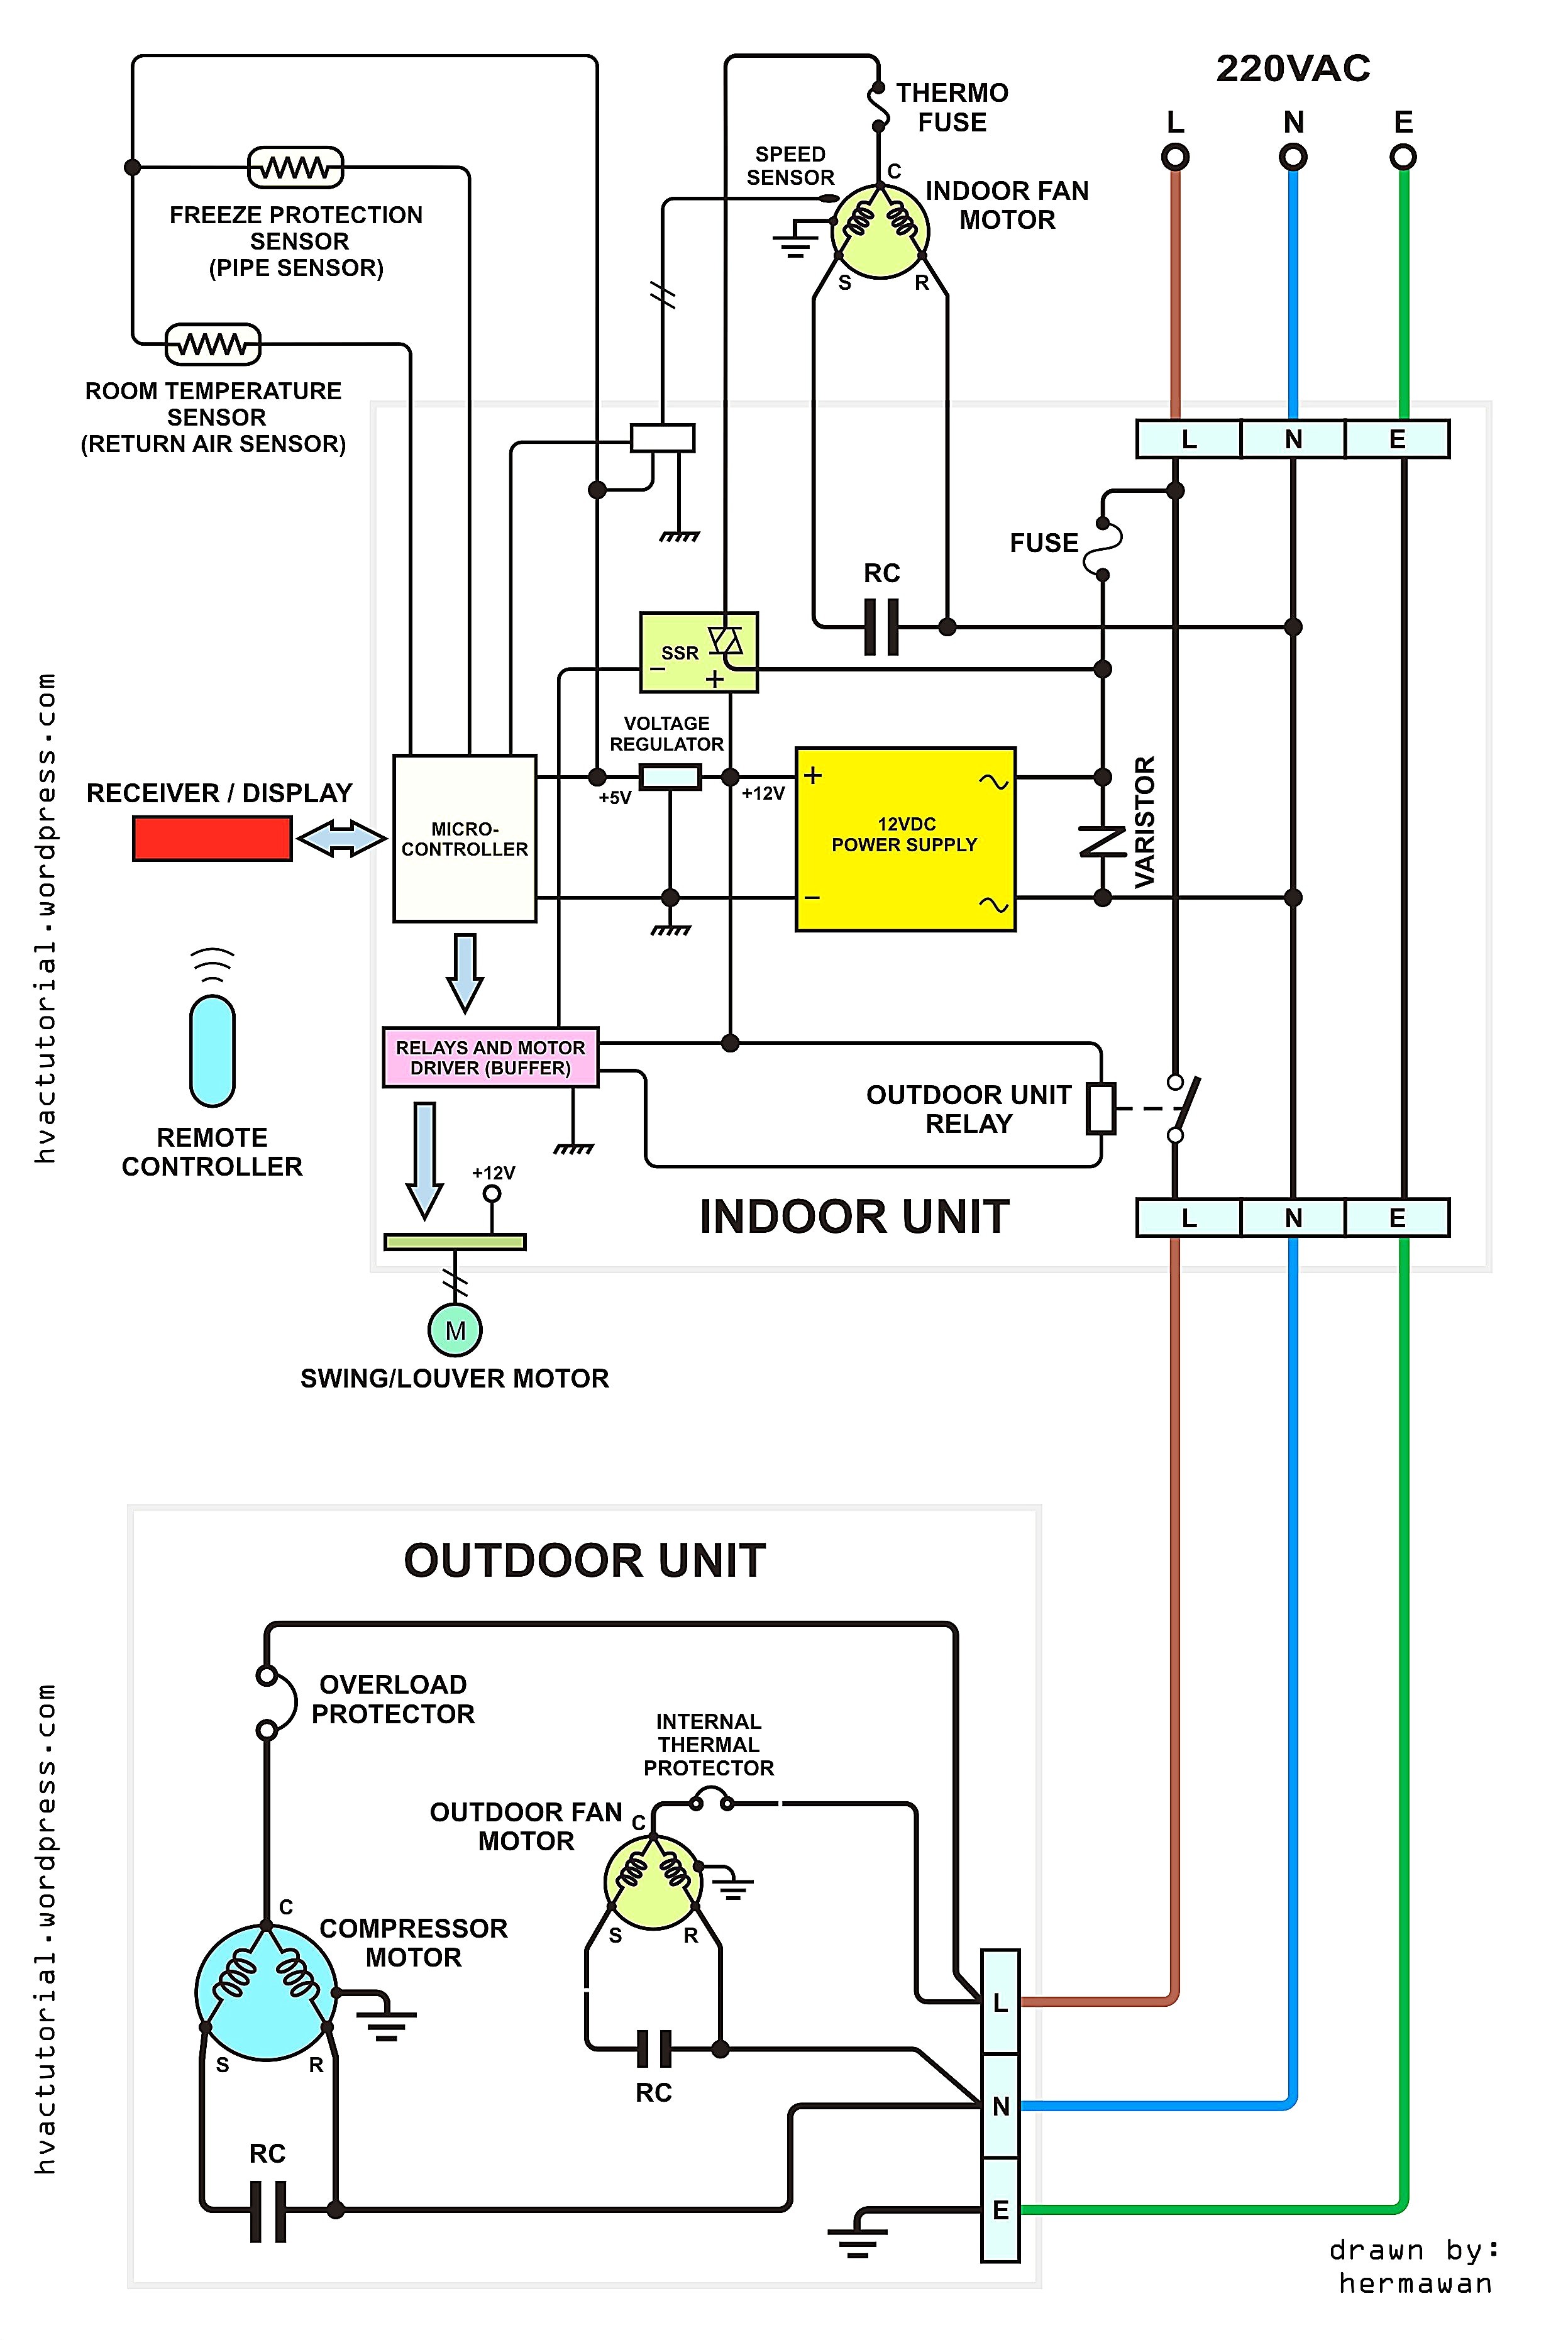 Carrier thermostat Wiring Diagram Heat Pump thermostat Wiring Diagram Classy Shape Hvac why Does Wires